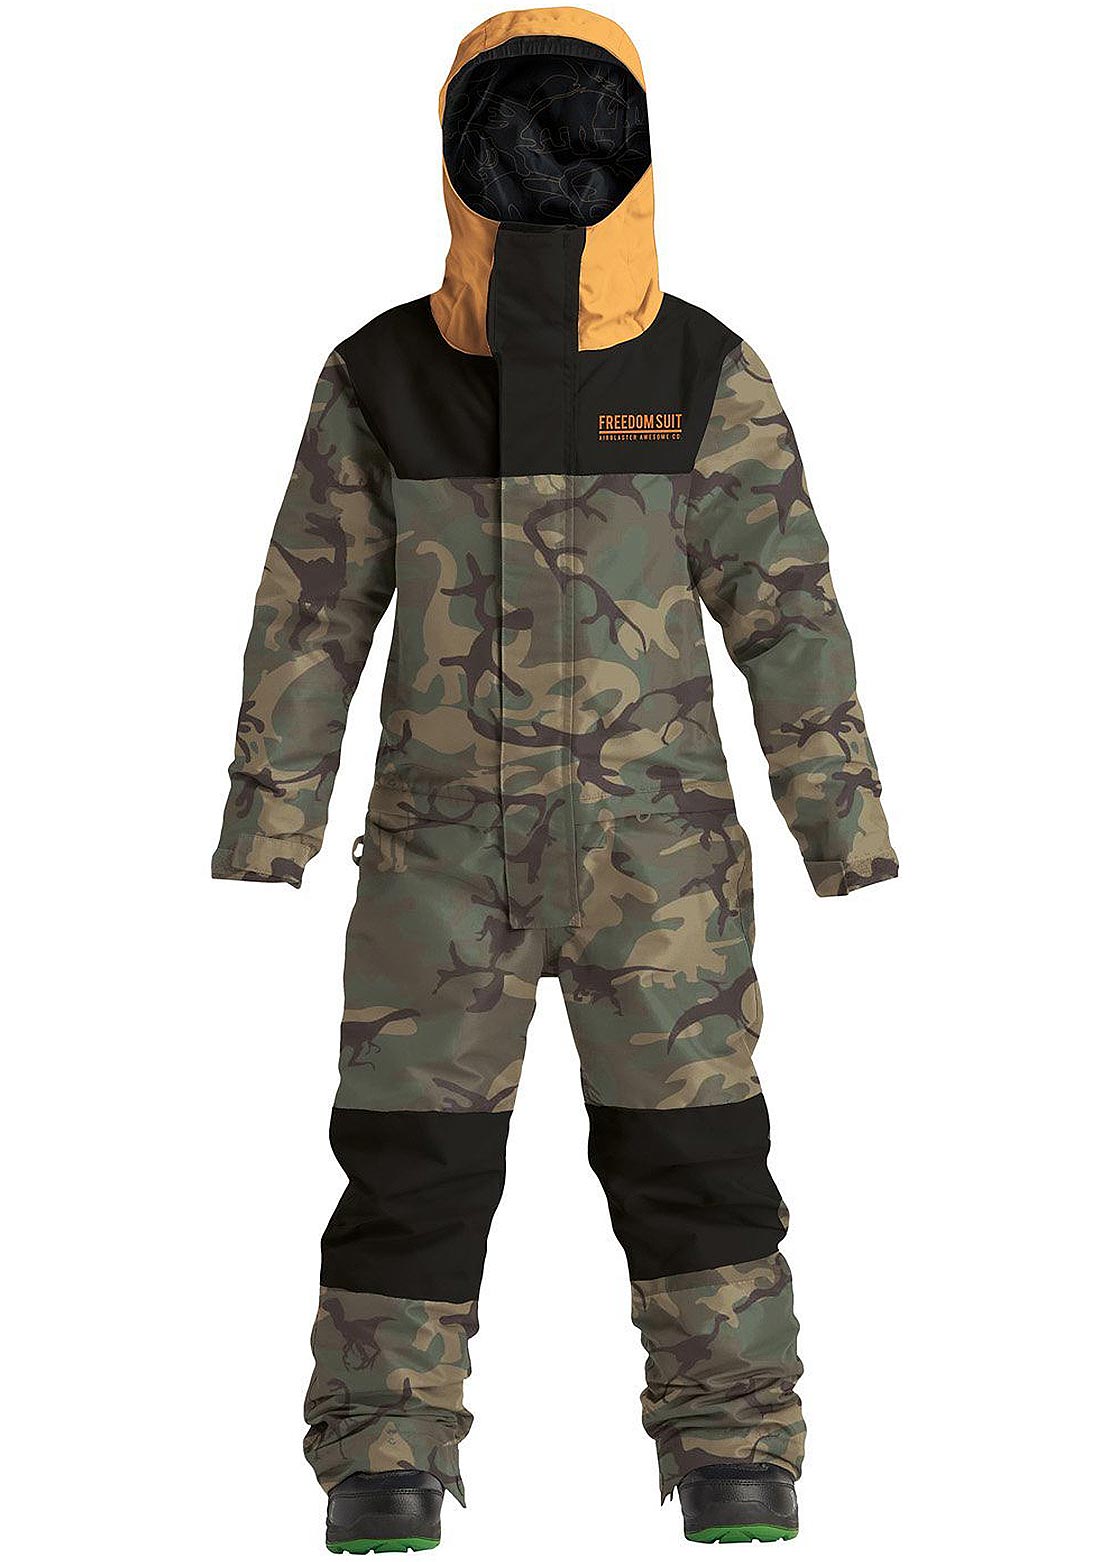 Airblaster Junior Youth Freedom Suit OG Dinoflage